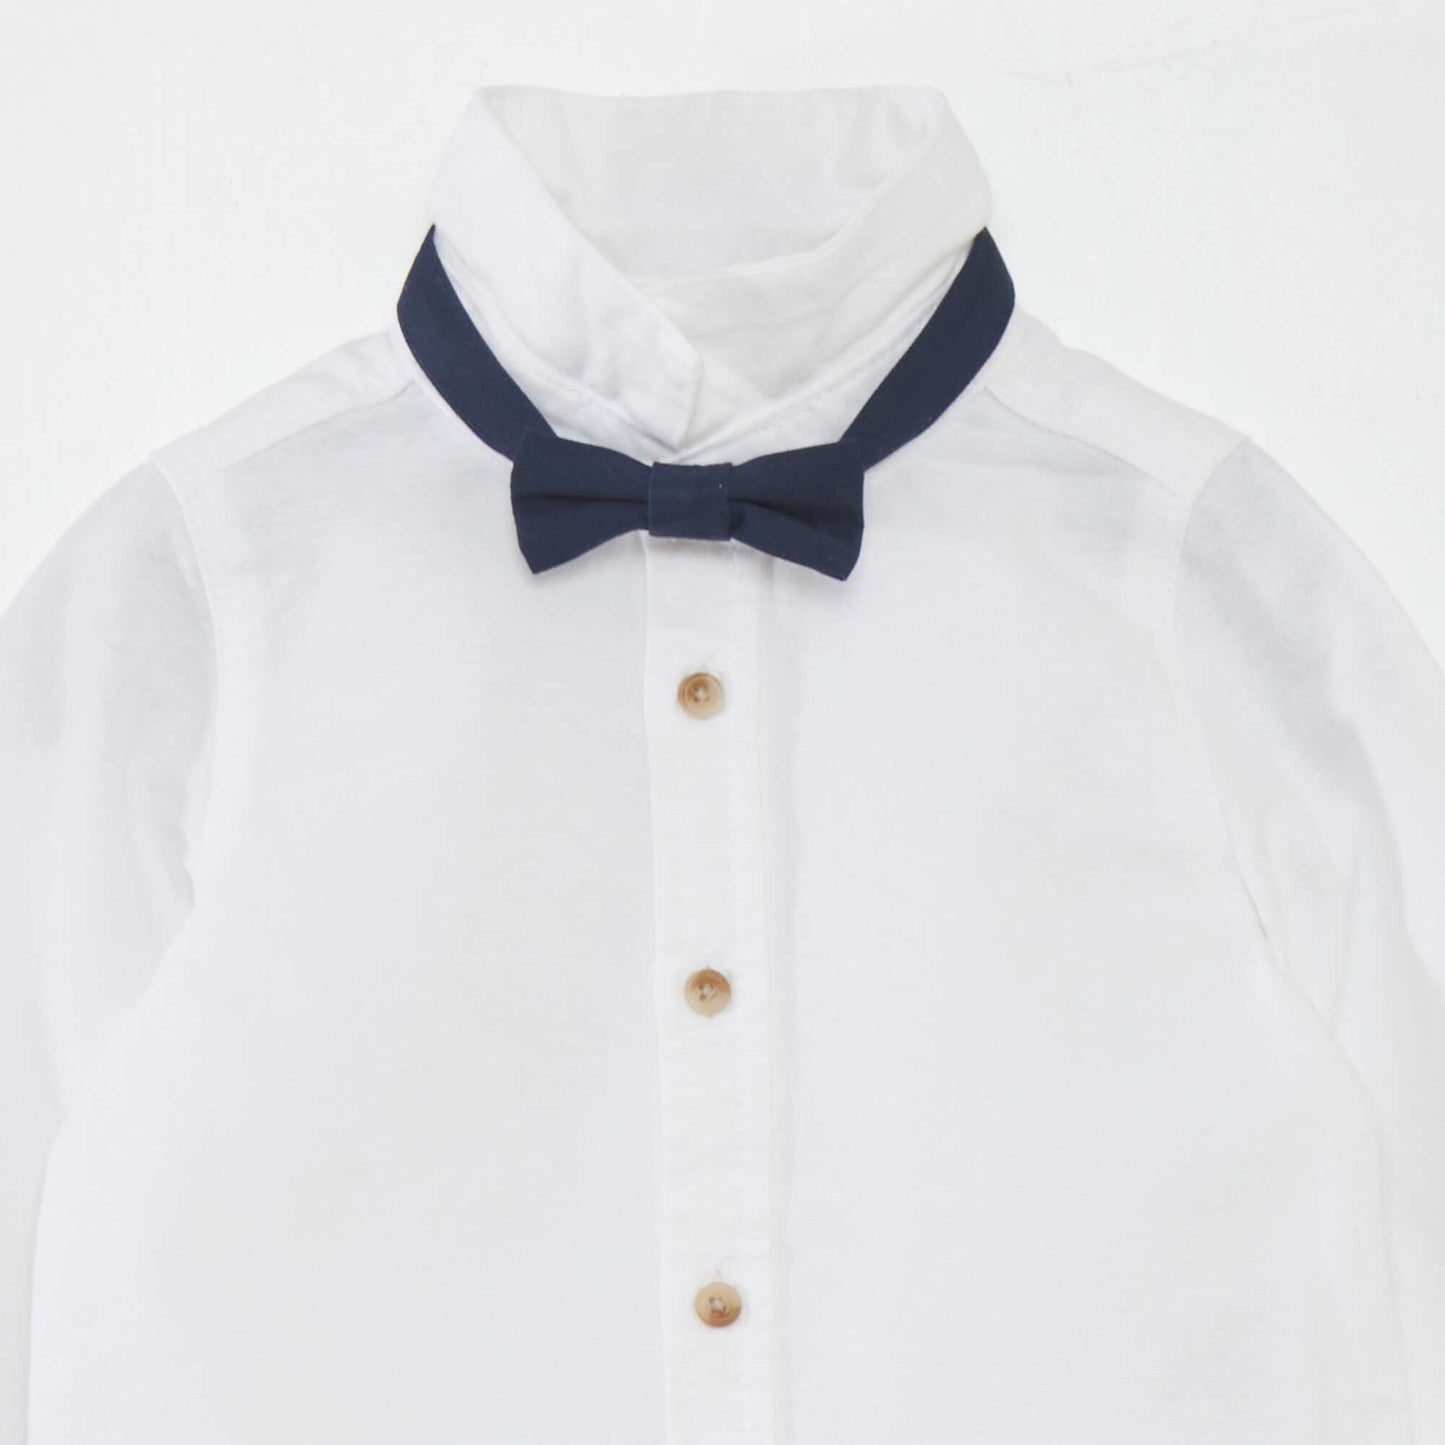 White shirt and bow tie - 2-piece set white